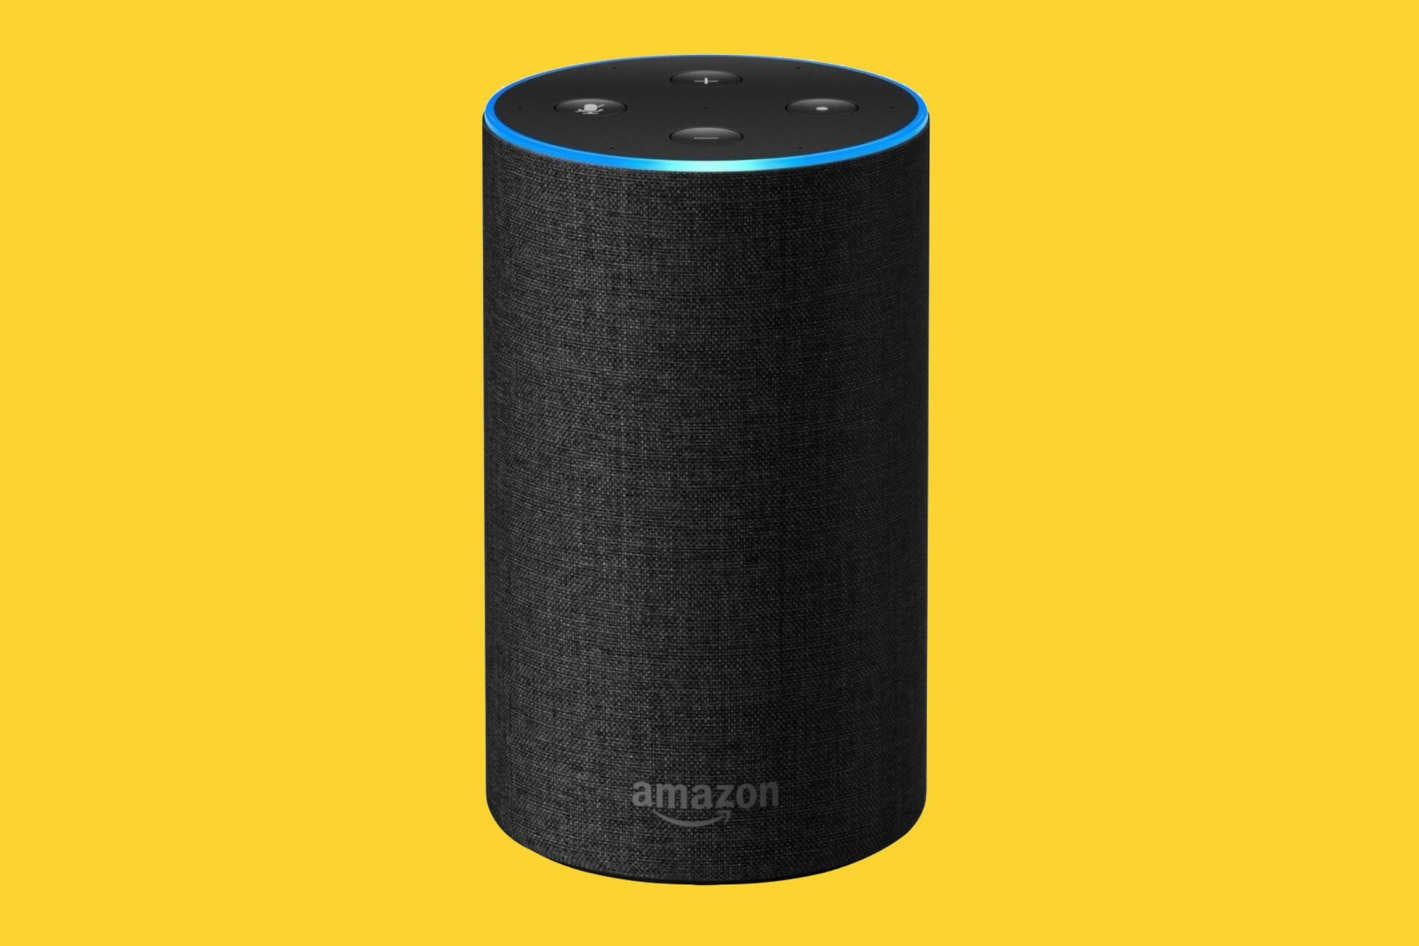 An Amazon Echo.